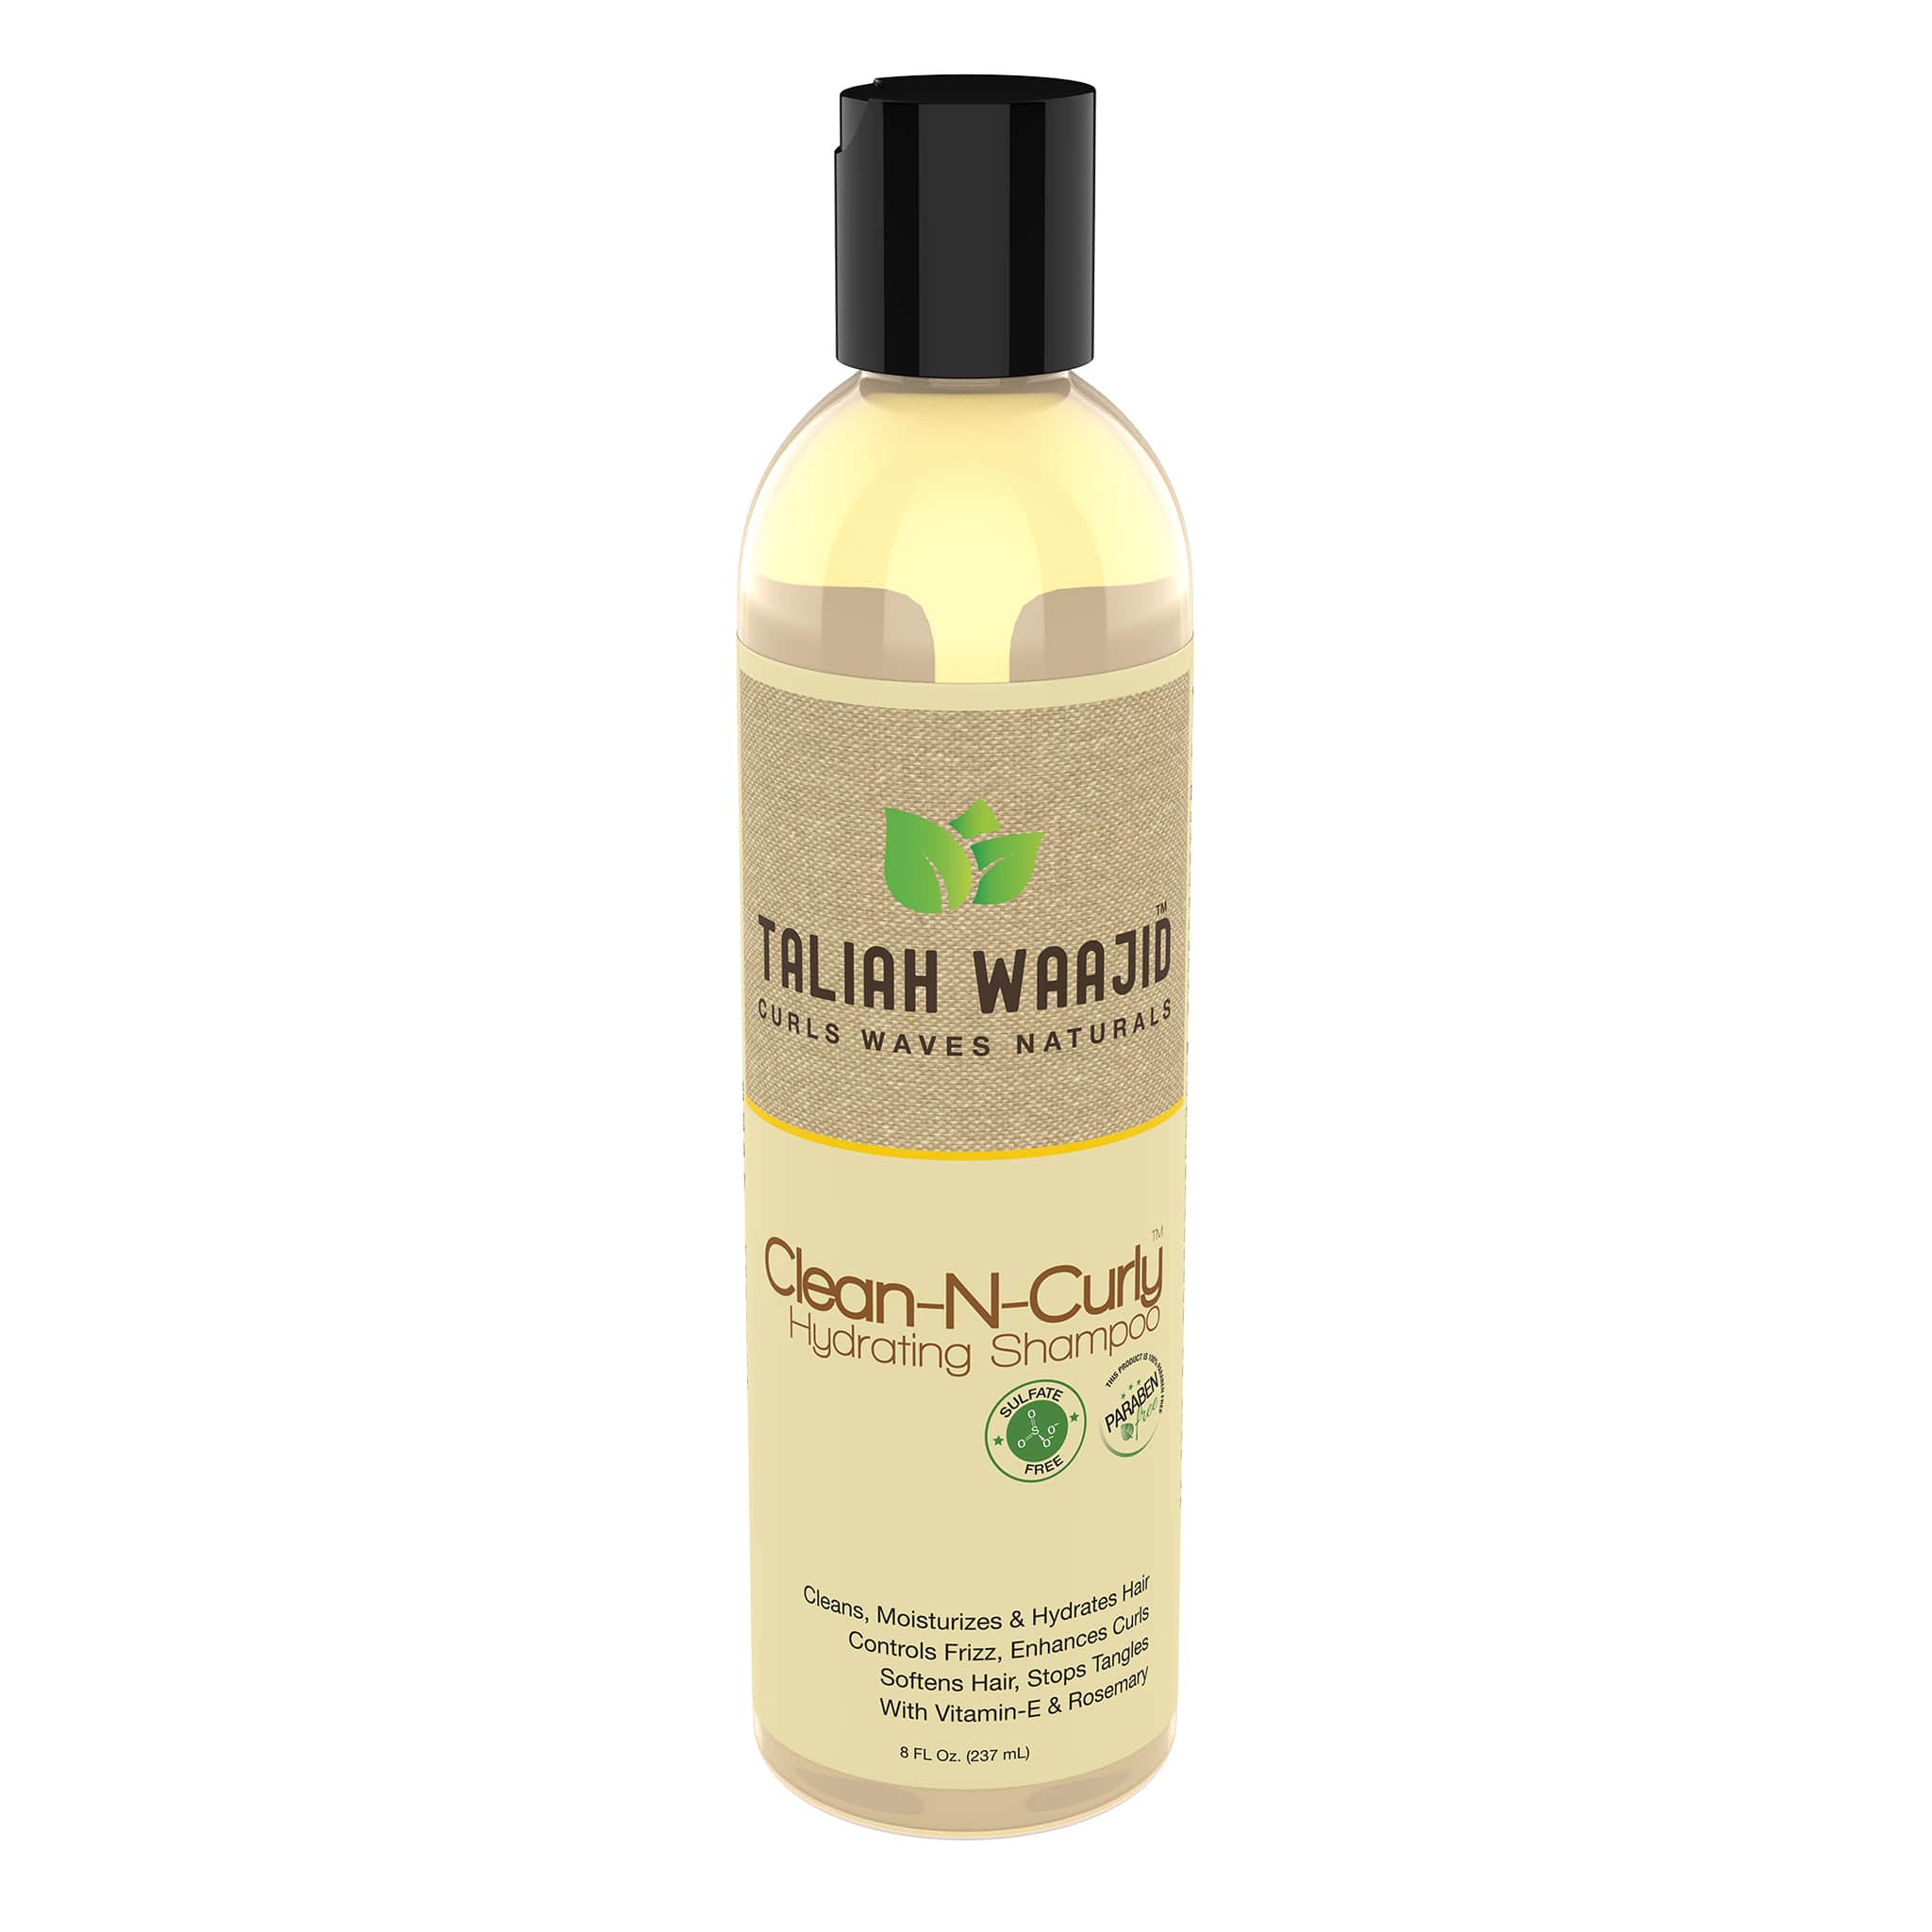 Taliah Waajid Curls, Waves, Naturals Clean-N-Curly Hydrating Shampoo 8oz